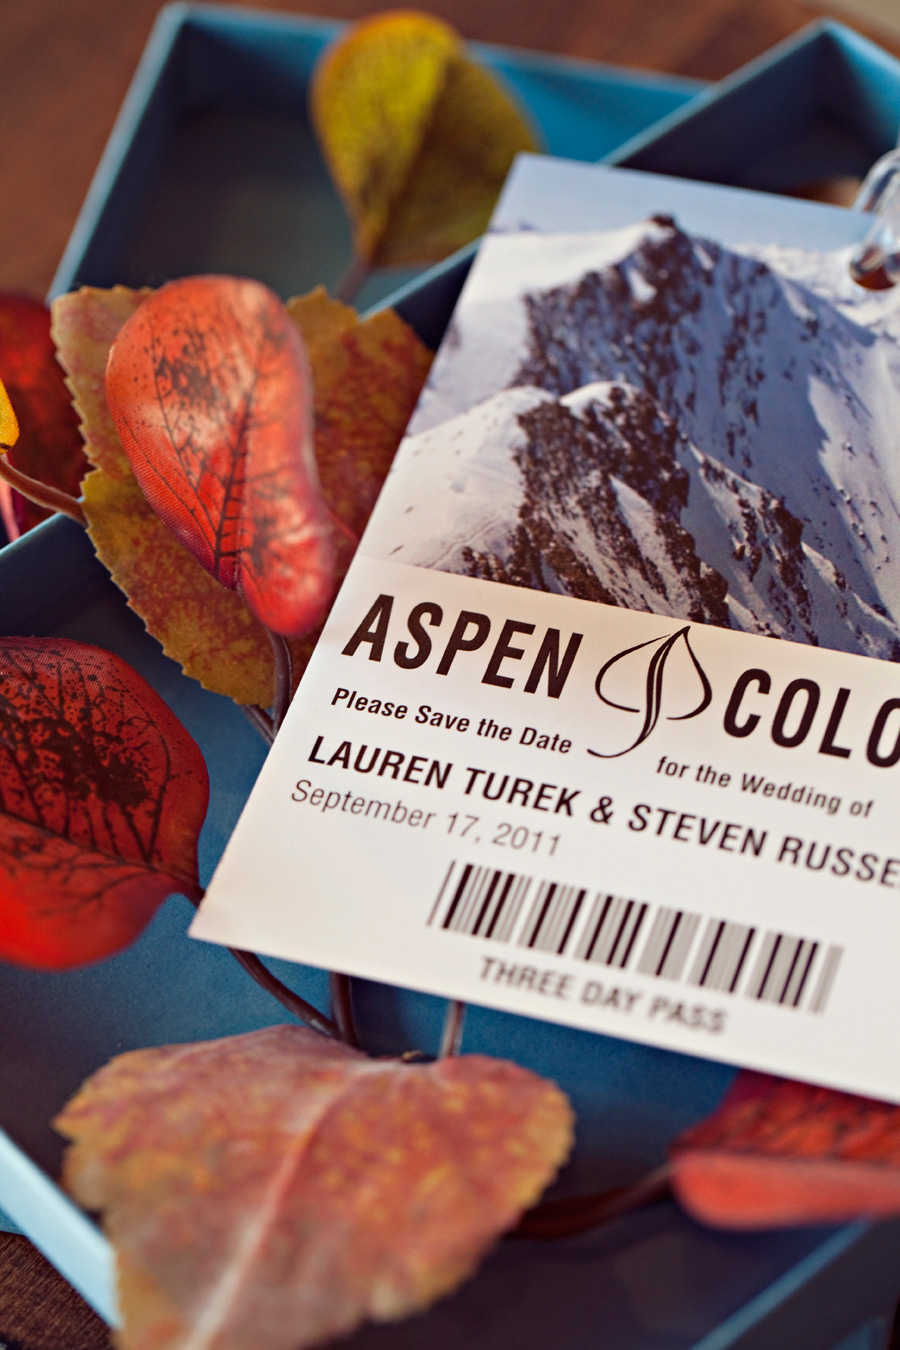 dating in Aspen Colorado gratis Europa dating site 2014